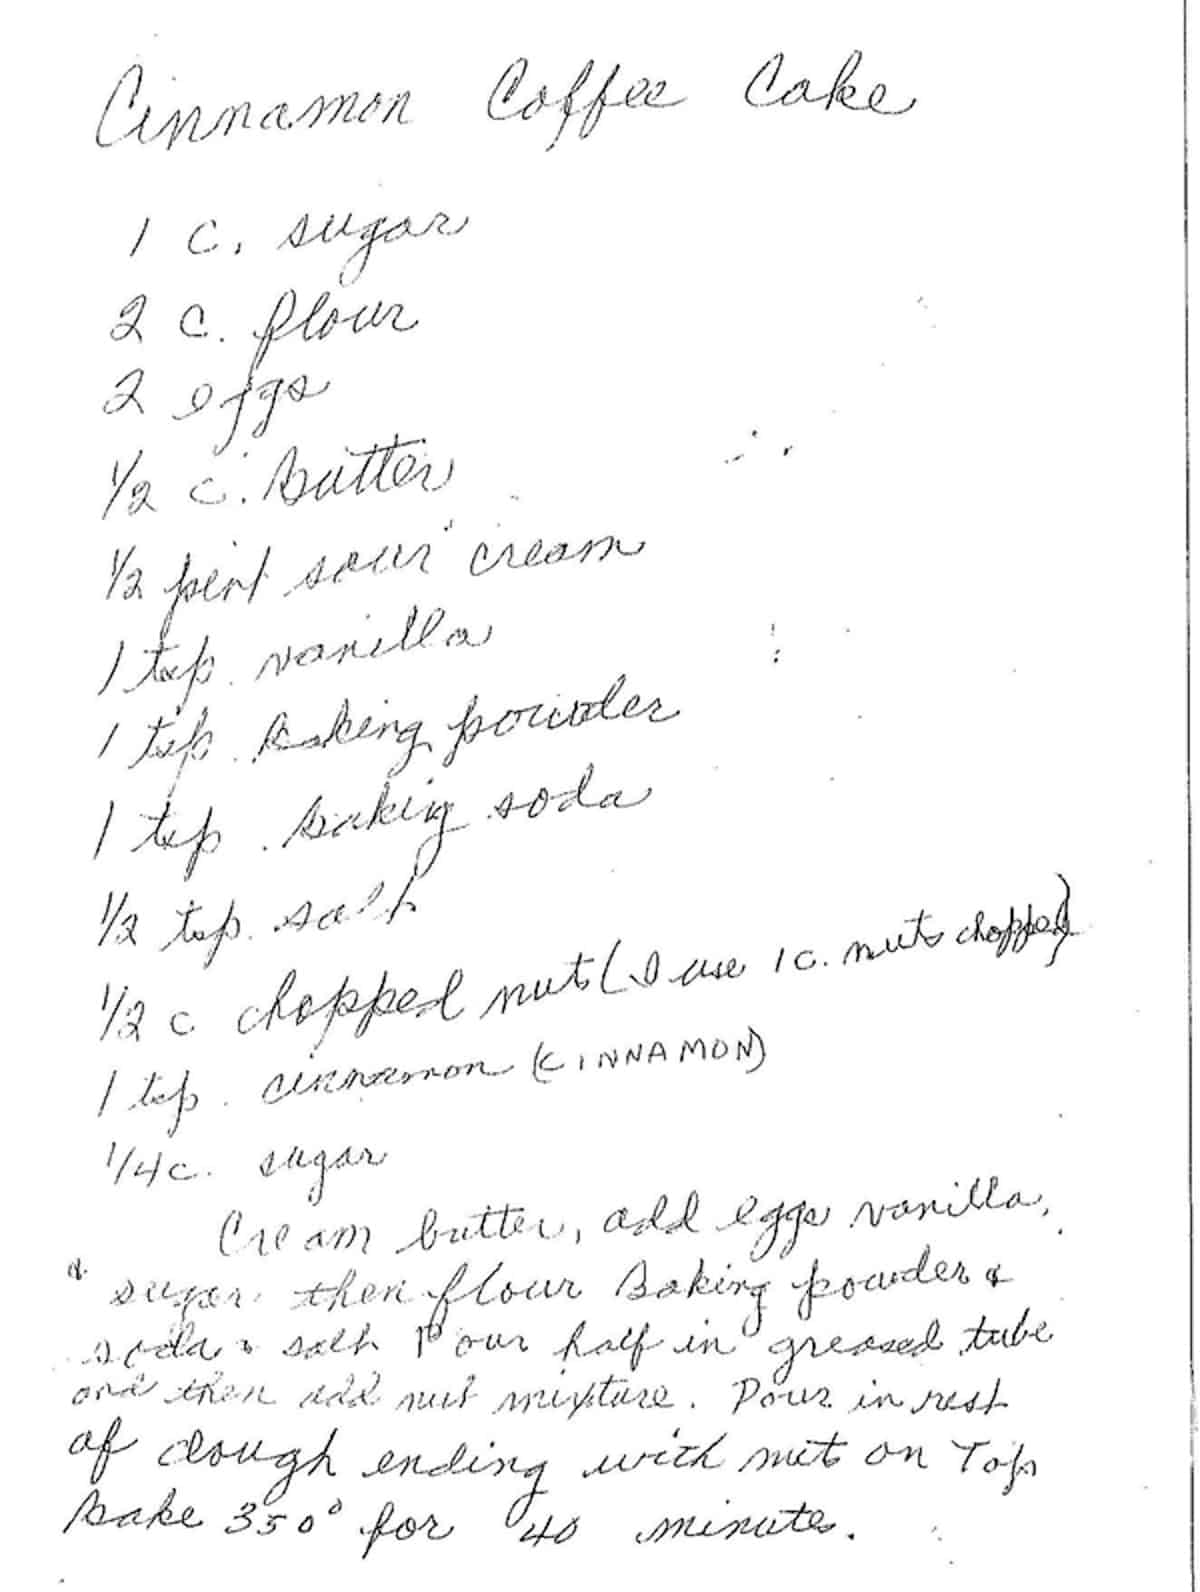 A handwritten recipe for cinnamon coffee cake.